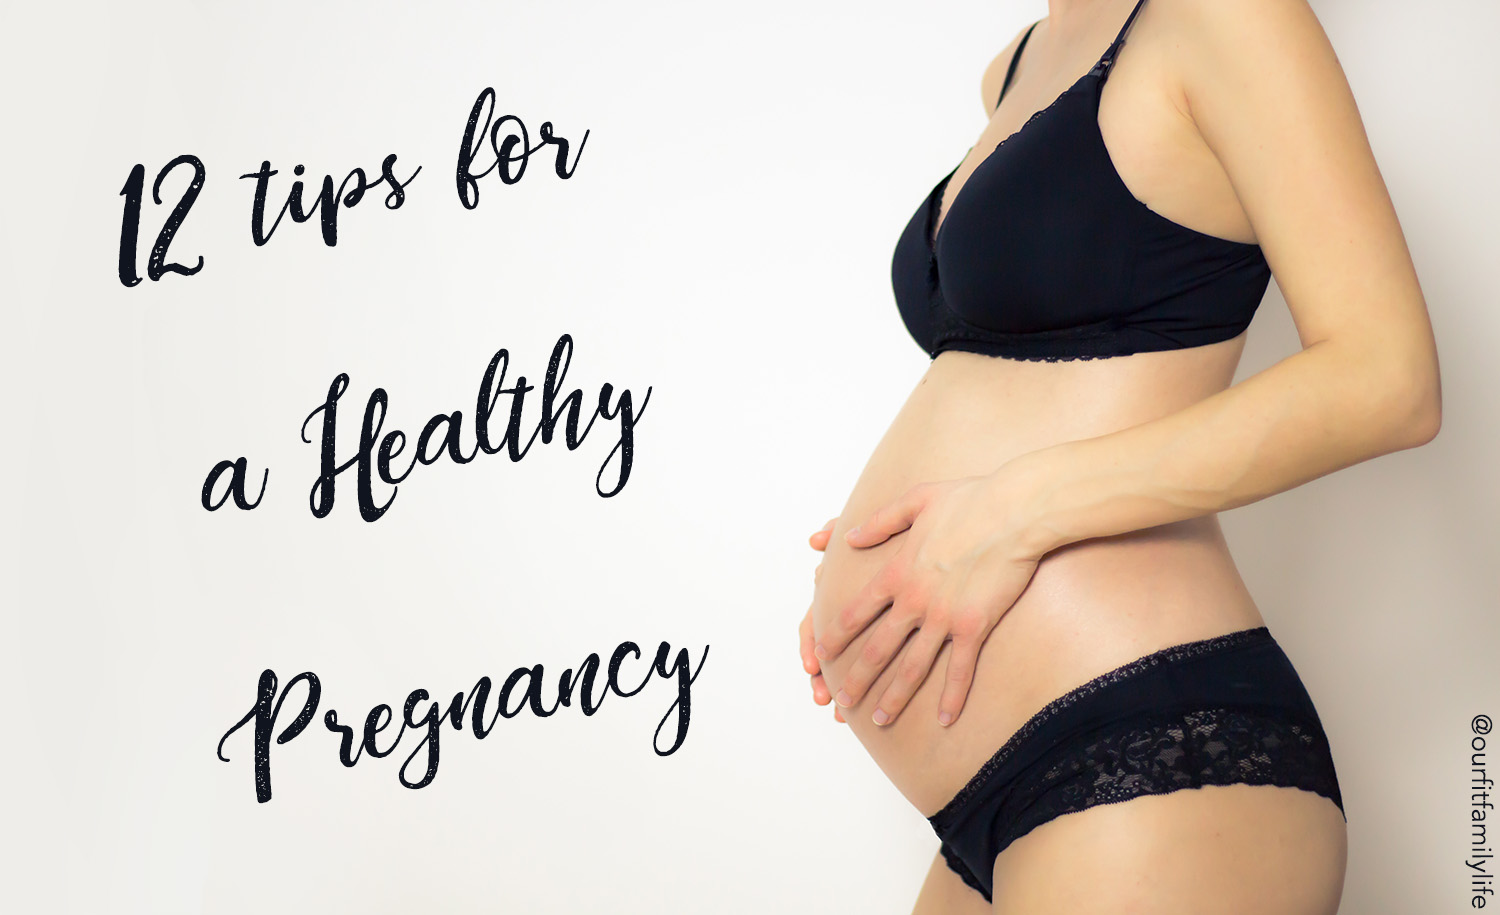 9 months pregnancy tips